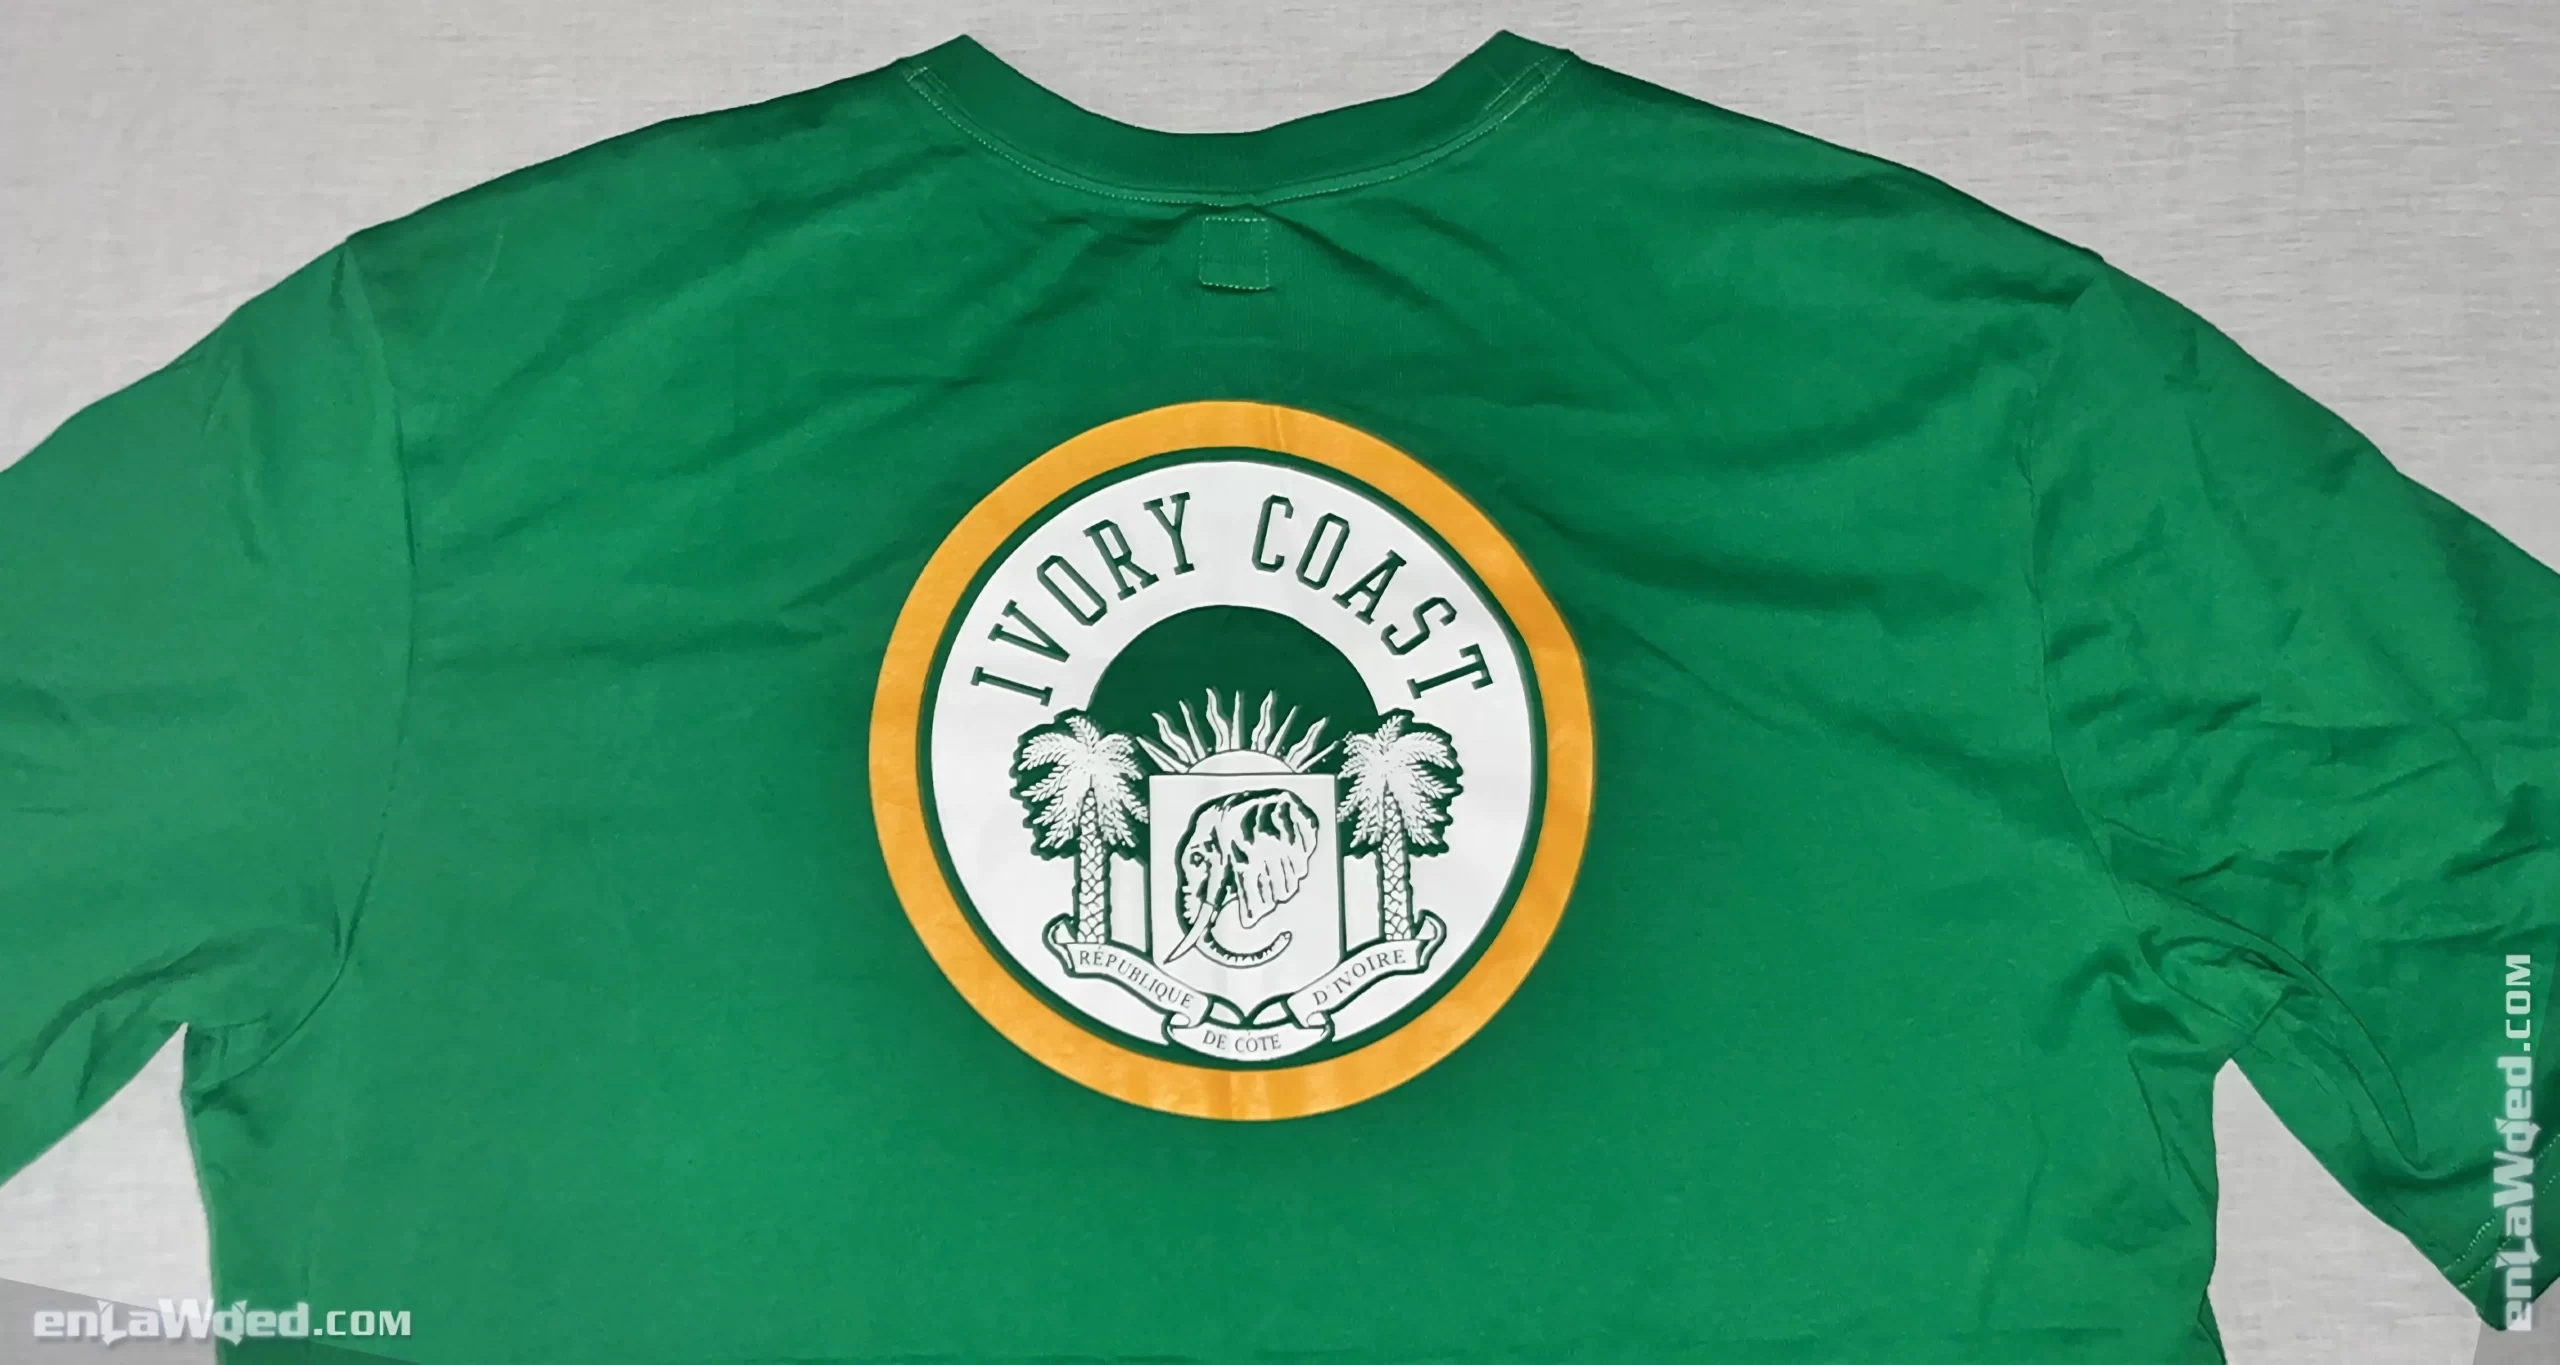 Men’s 2007 Ivory Coast T-Shirt by Adidas Originals: Surefire (EnLawded.com file #lp5six07127297o0p32y93sy)